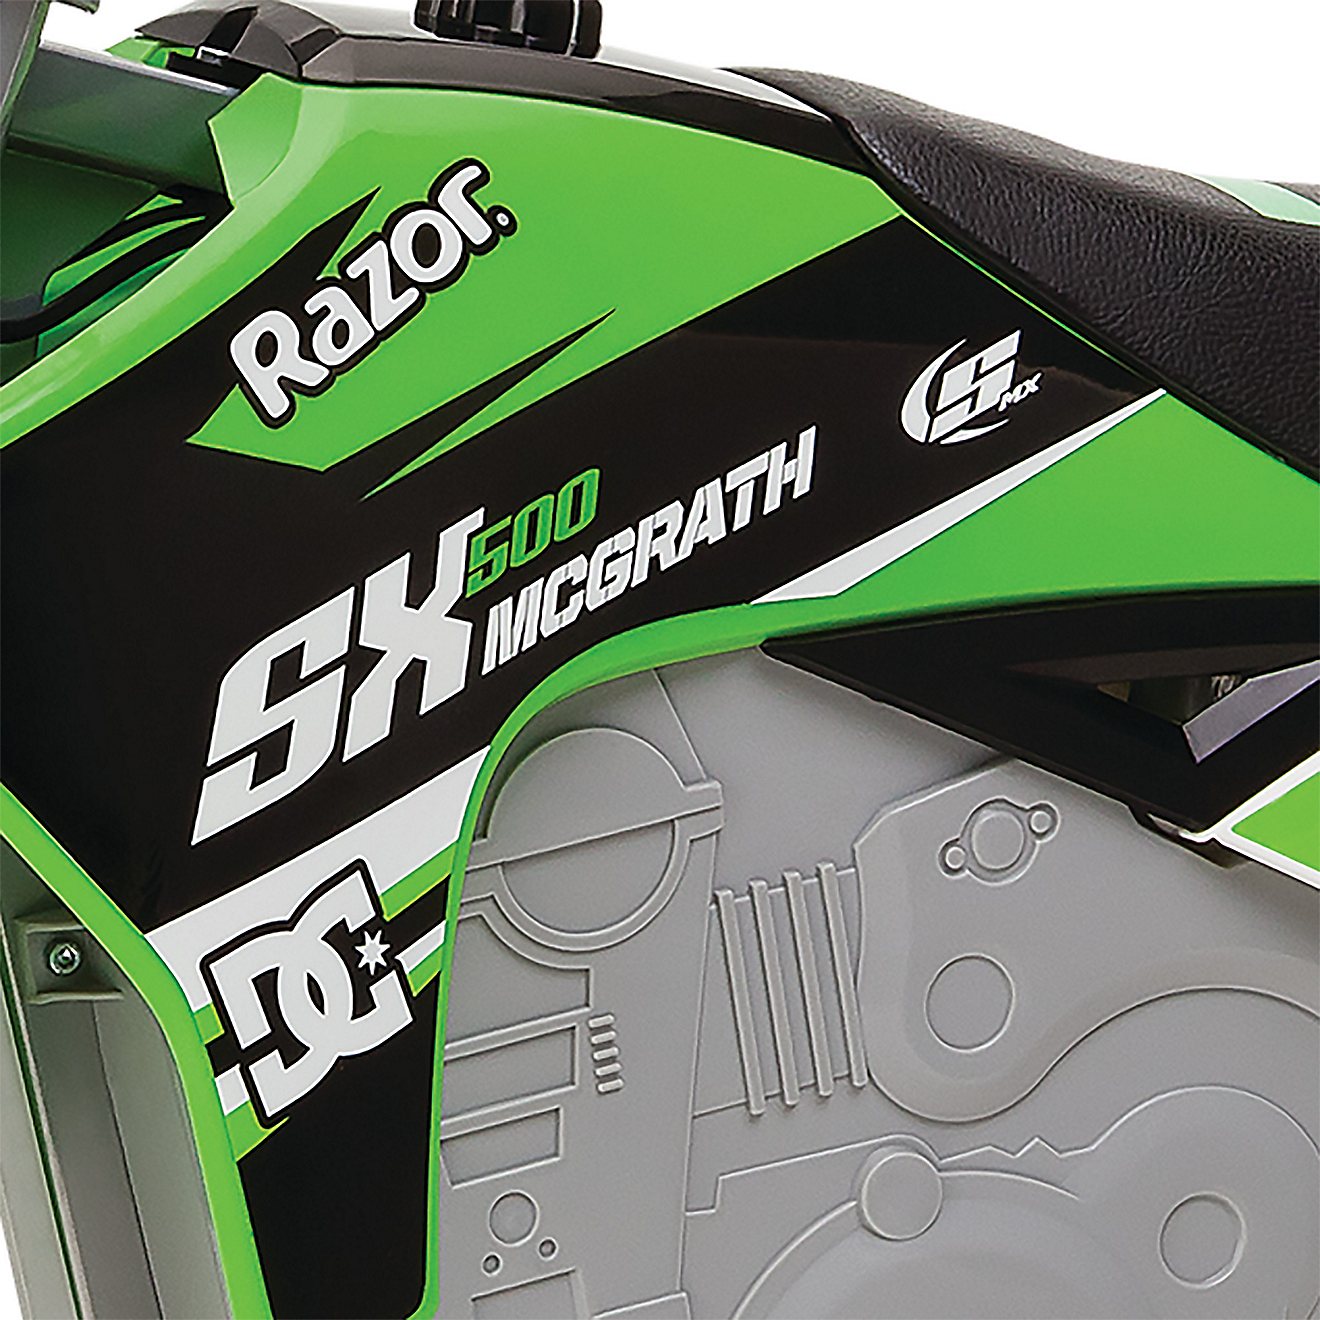 Razor SX500 McGrath Dirt Bike                                                                                                    - view number 2